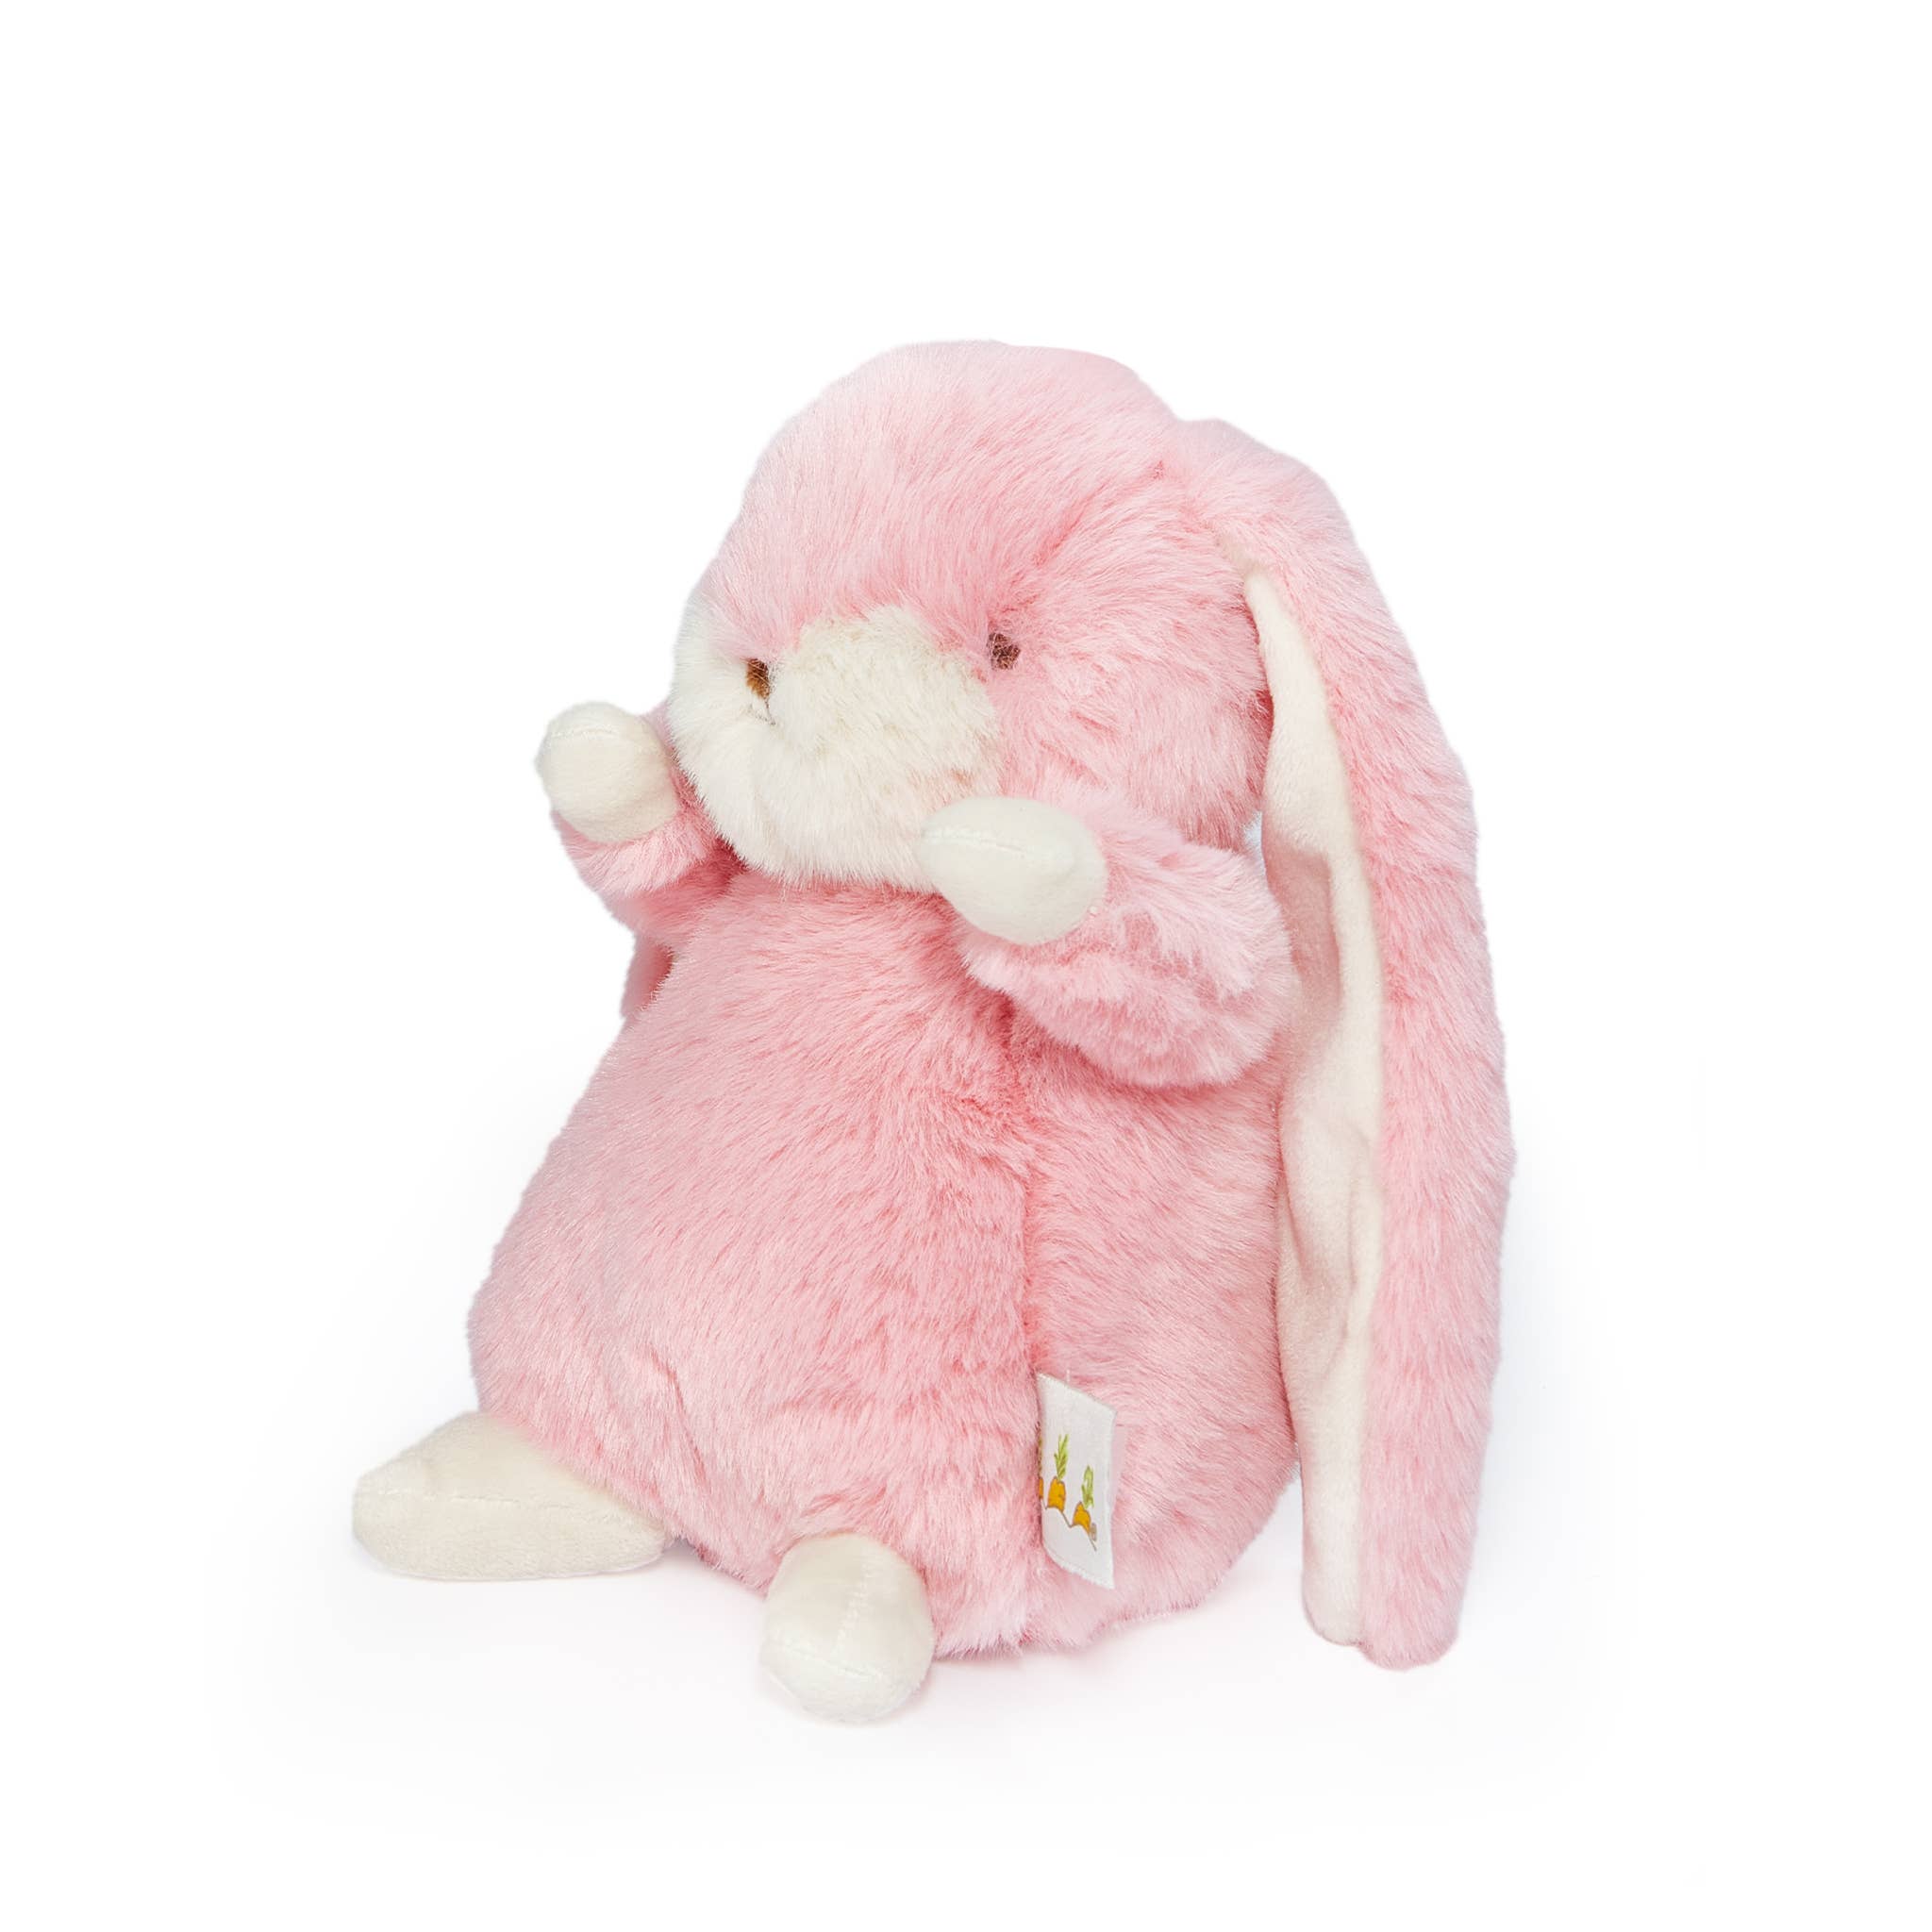 Tiny Nibble Bunny - Coral Blush